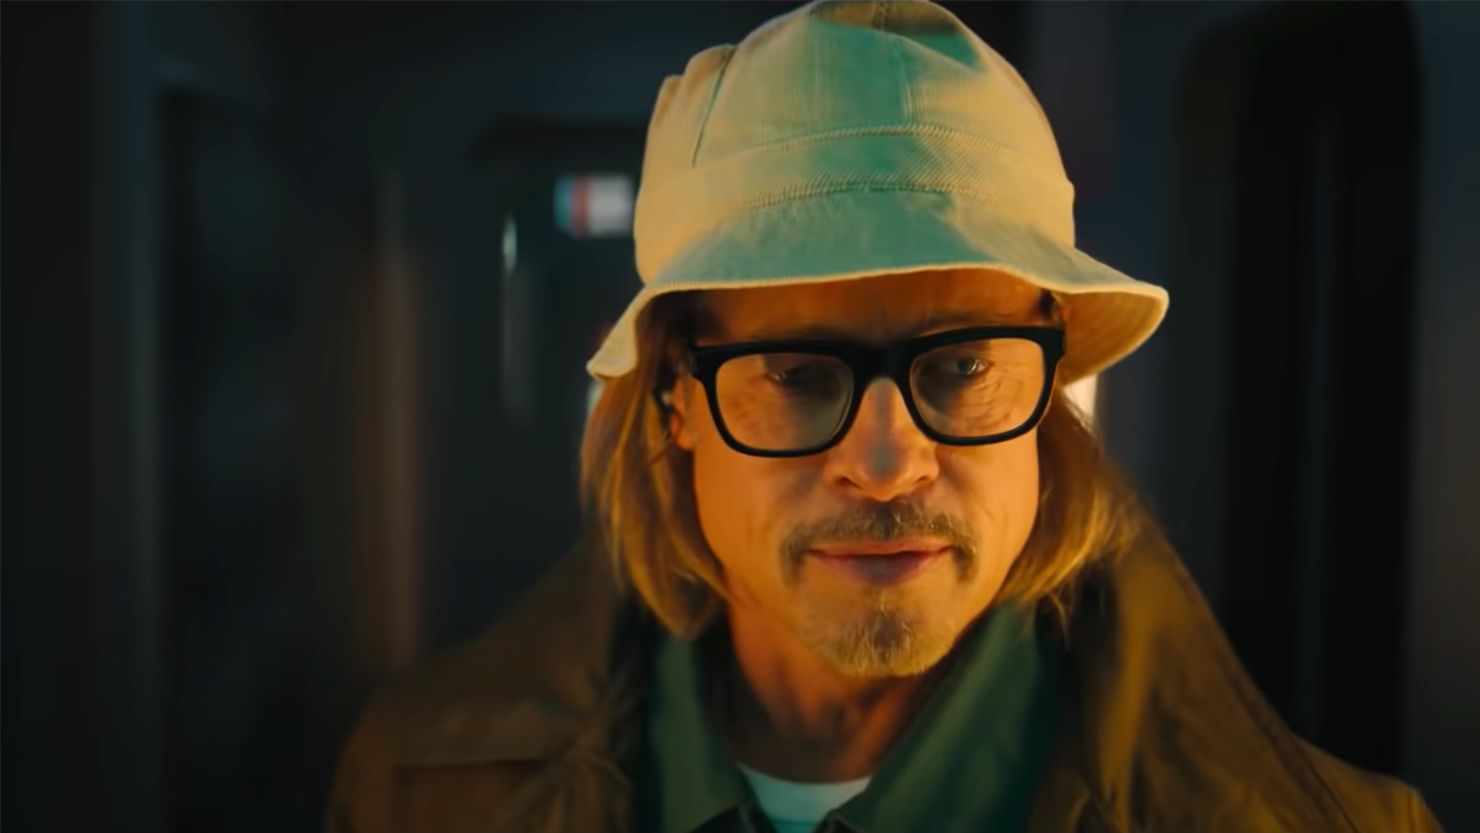 BULLET TRAIN Trailer 2 (NEW, 2022) Brad Pitt, Sandra Bullock Movie 